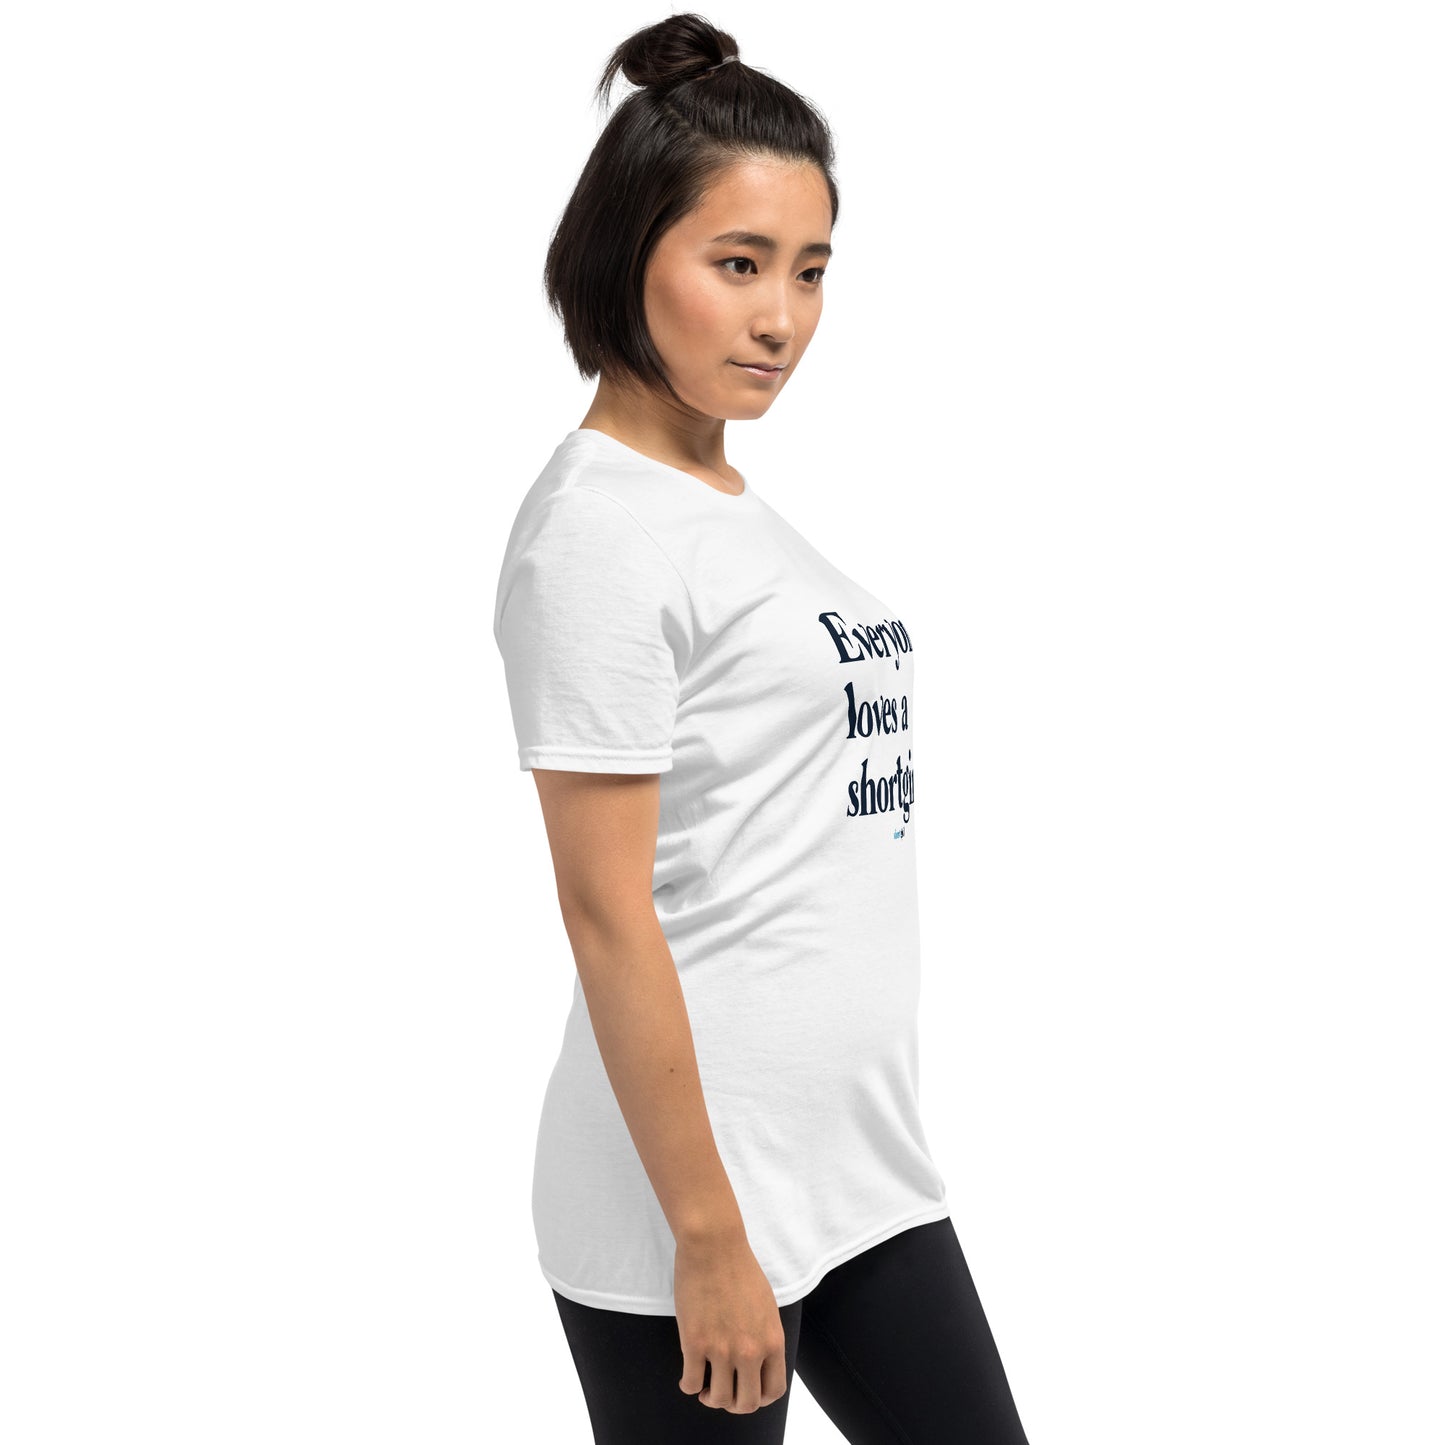 Short-Sleeve Unisex T-Shirt - Everyone Loves a shortgirl